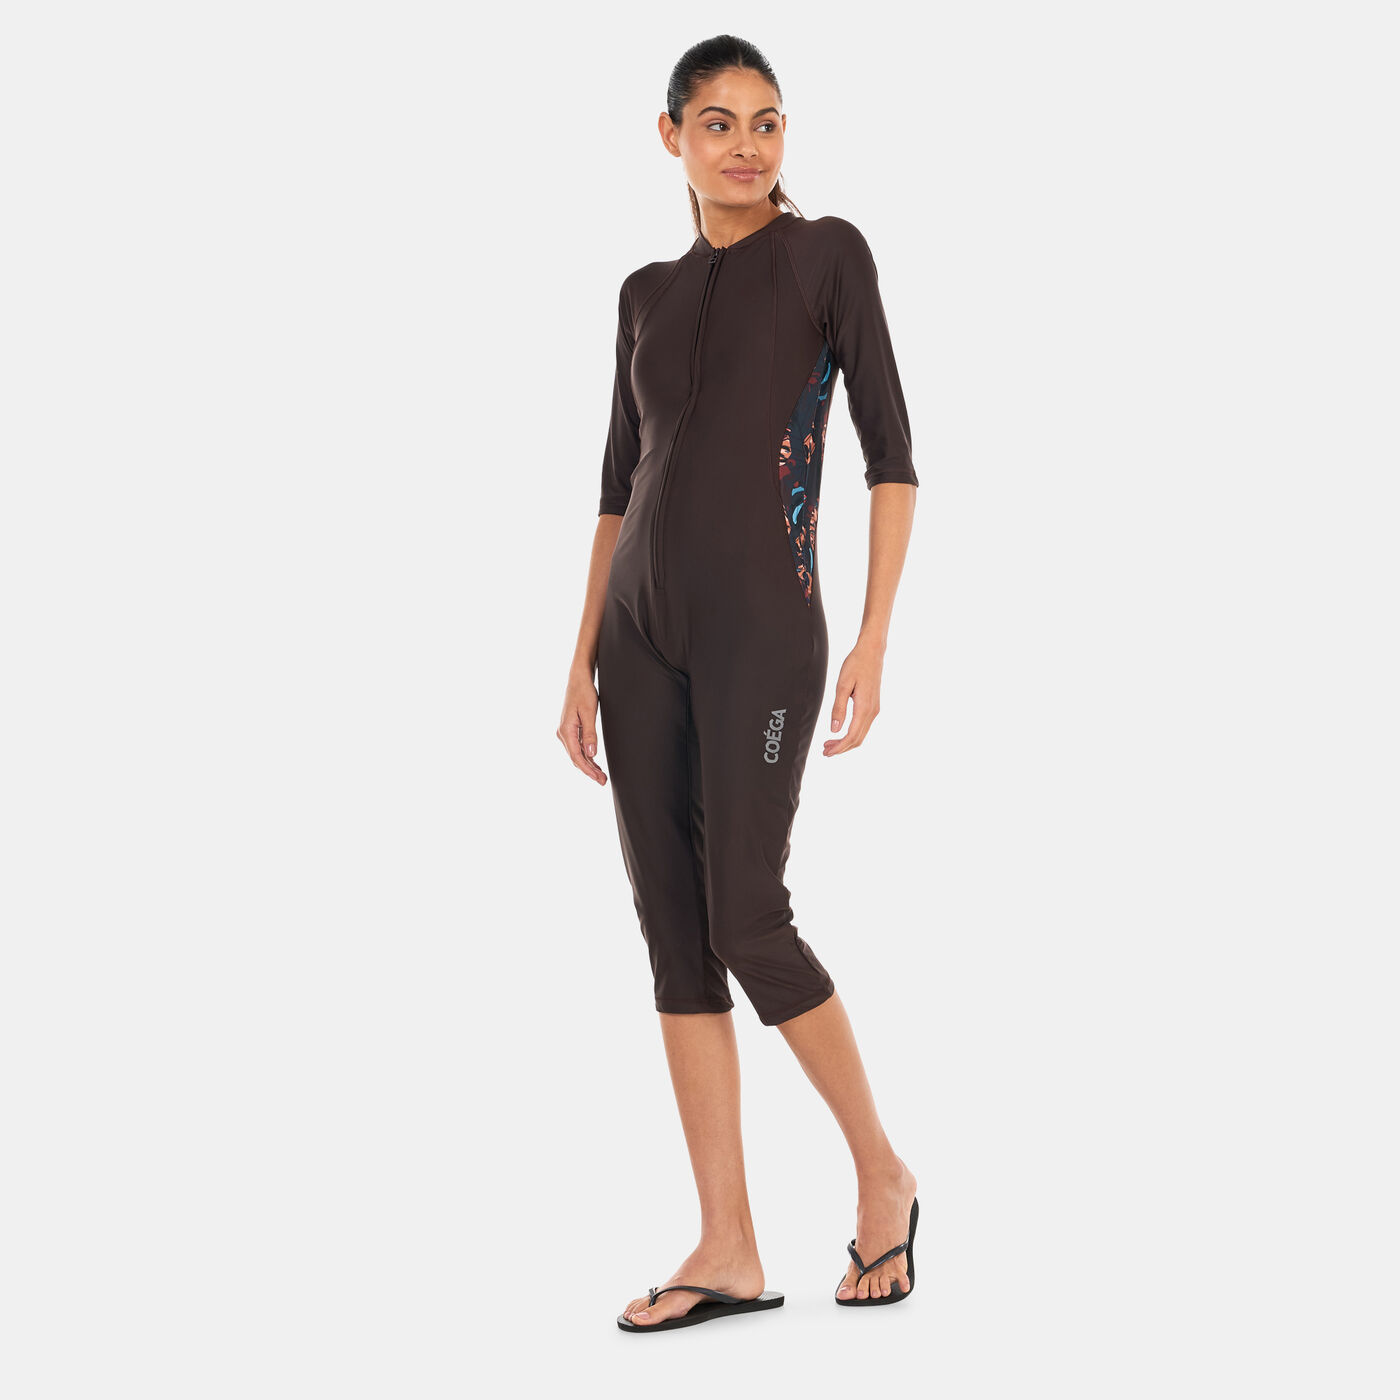 Women's 3/4 Length One-Piece SlimKini Swimsuit